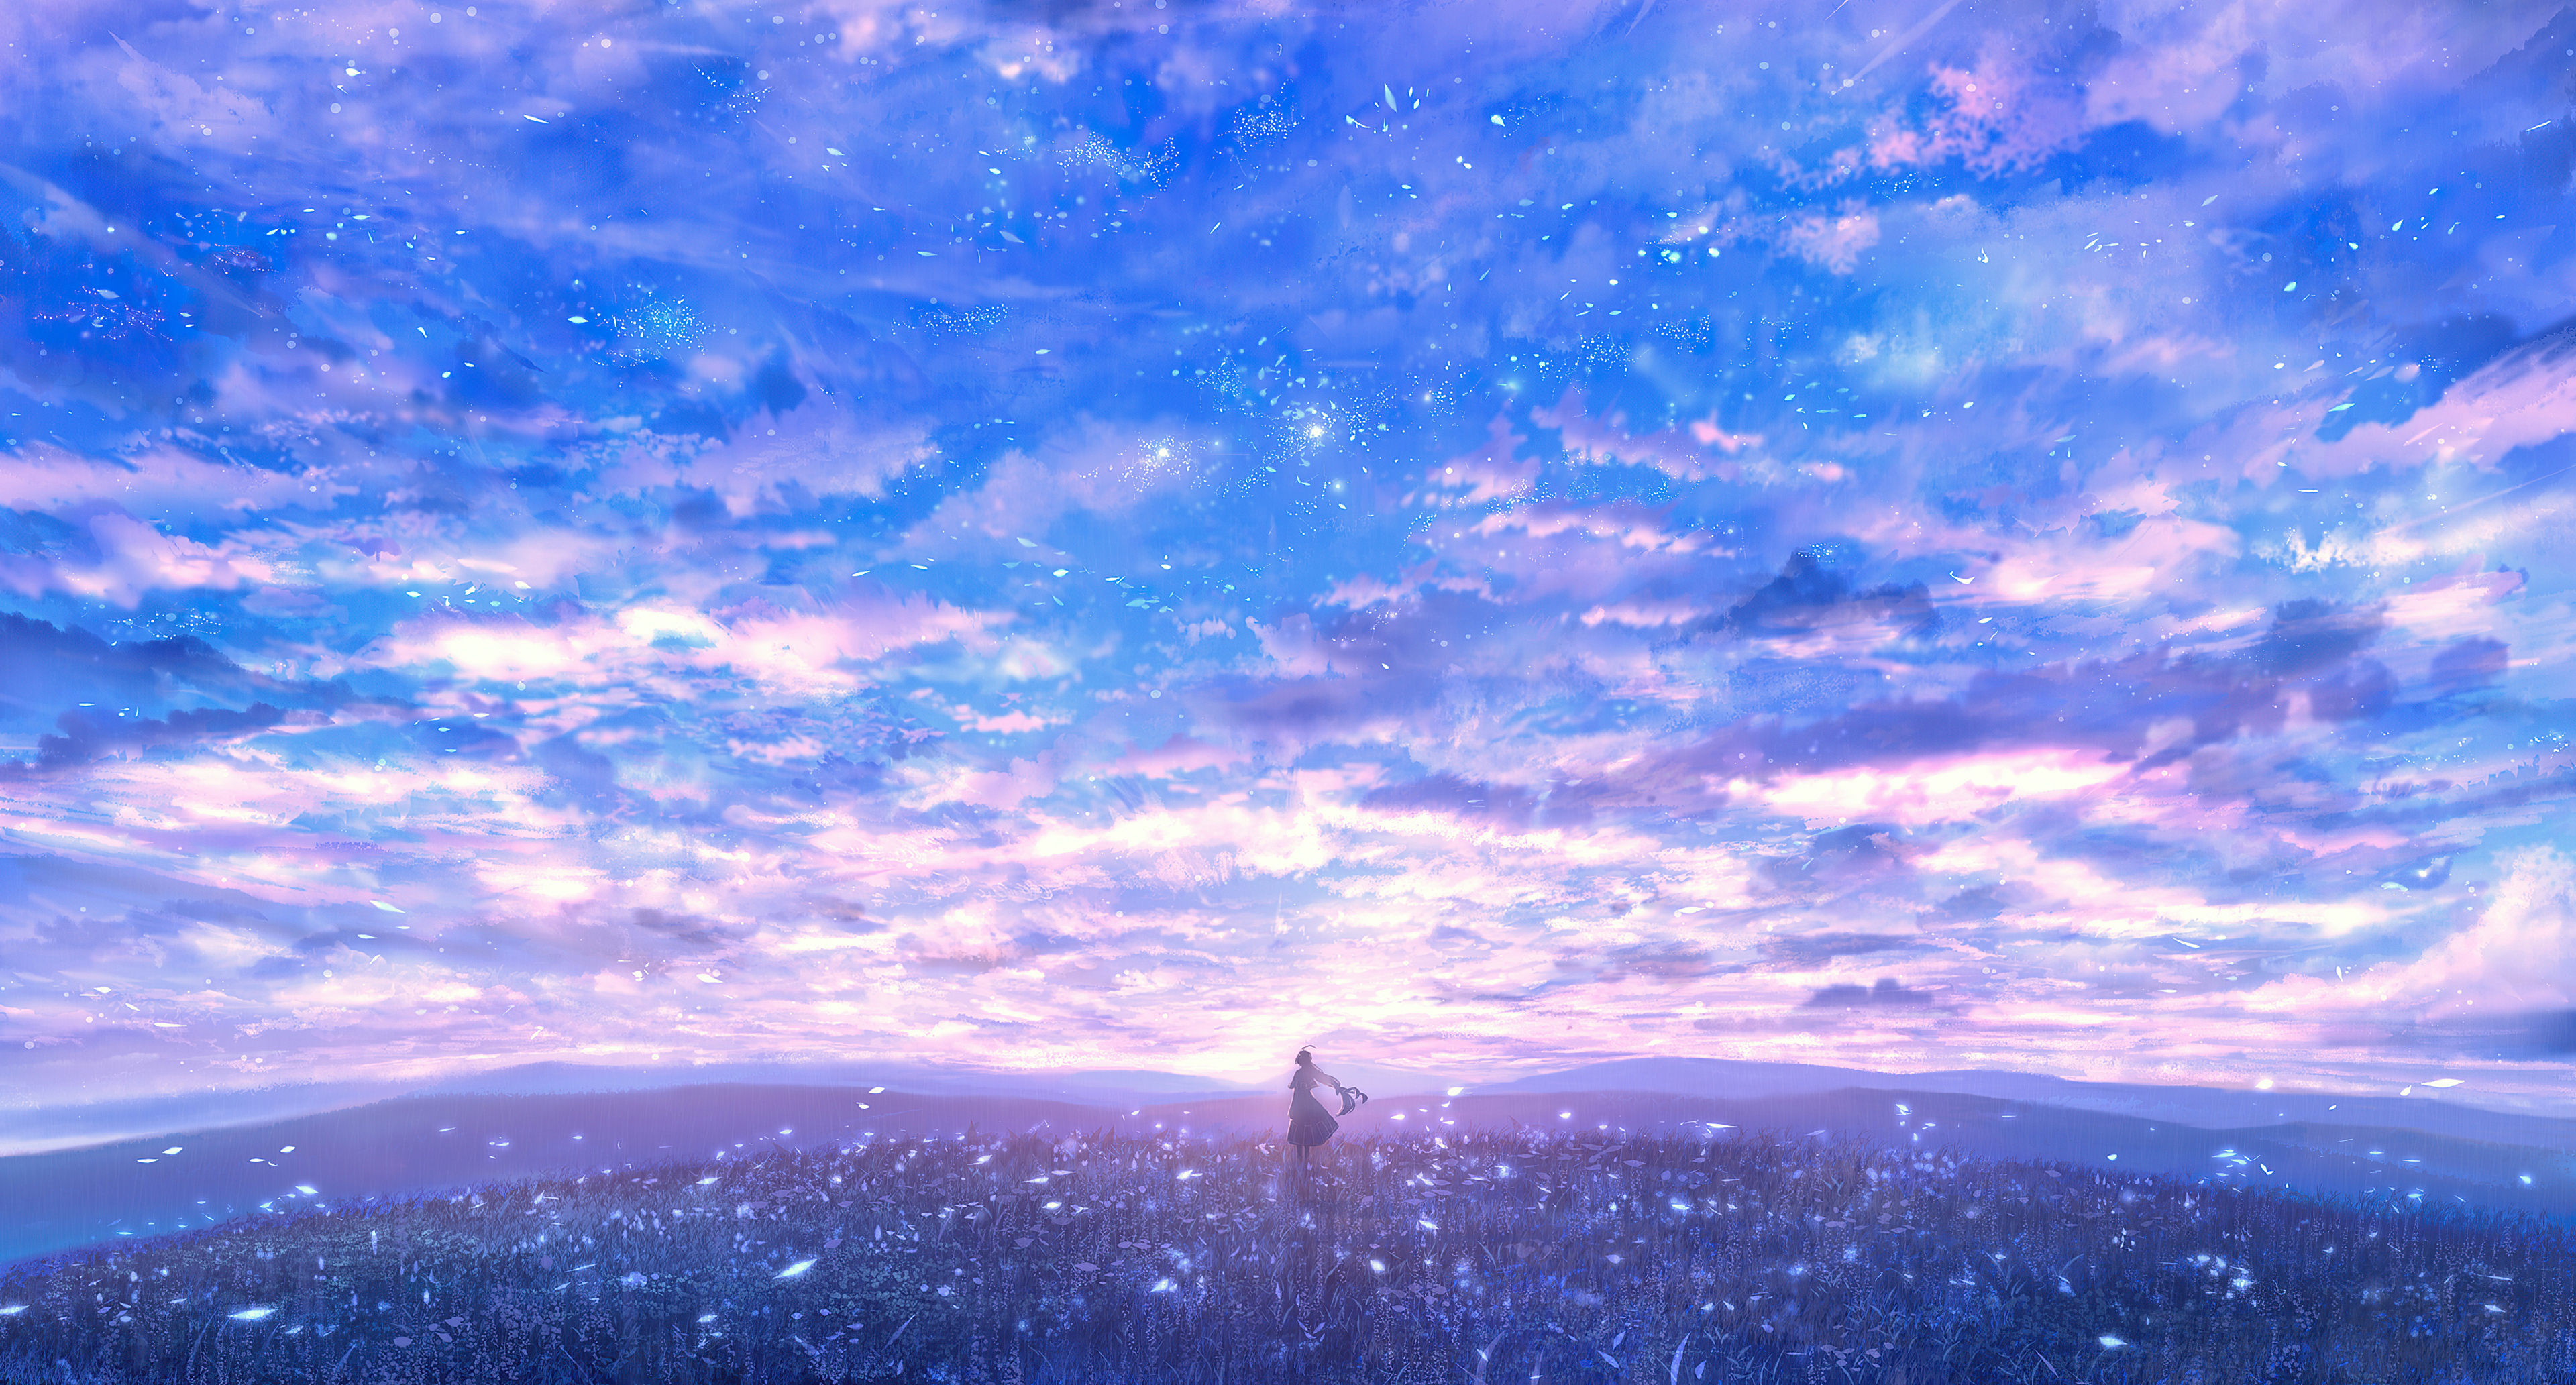 girl in lavender field alone clouds 1596921183 - Girl In Lavender Field Alone Clouds -